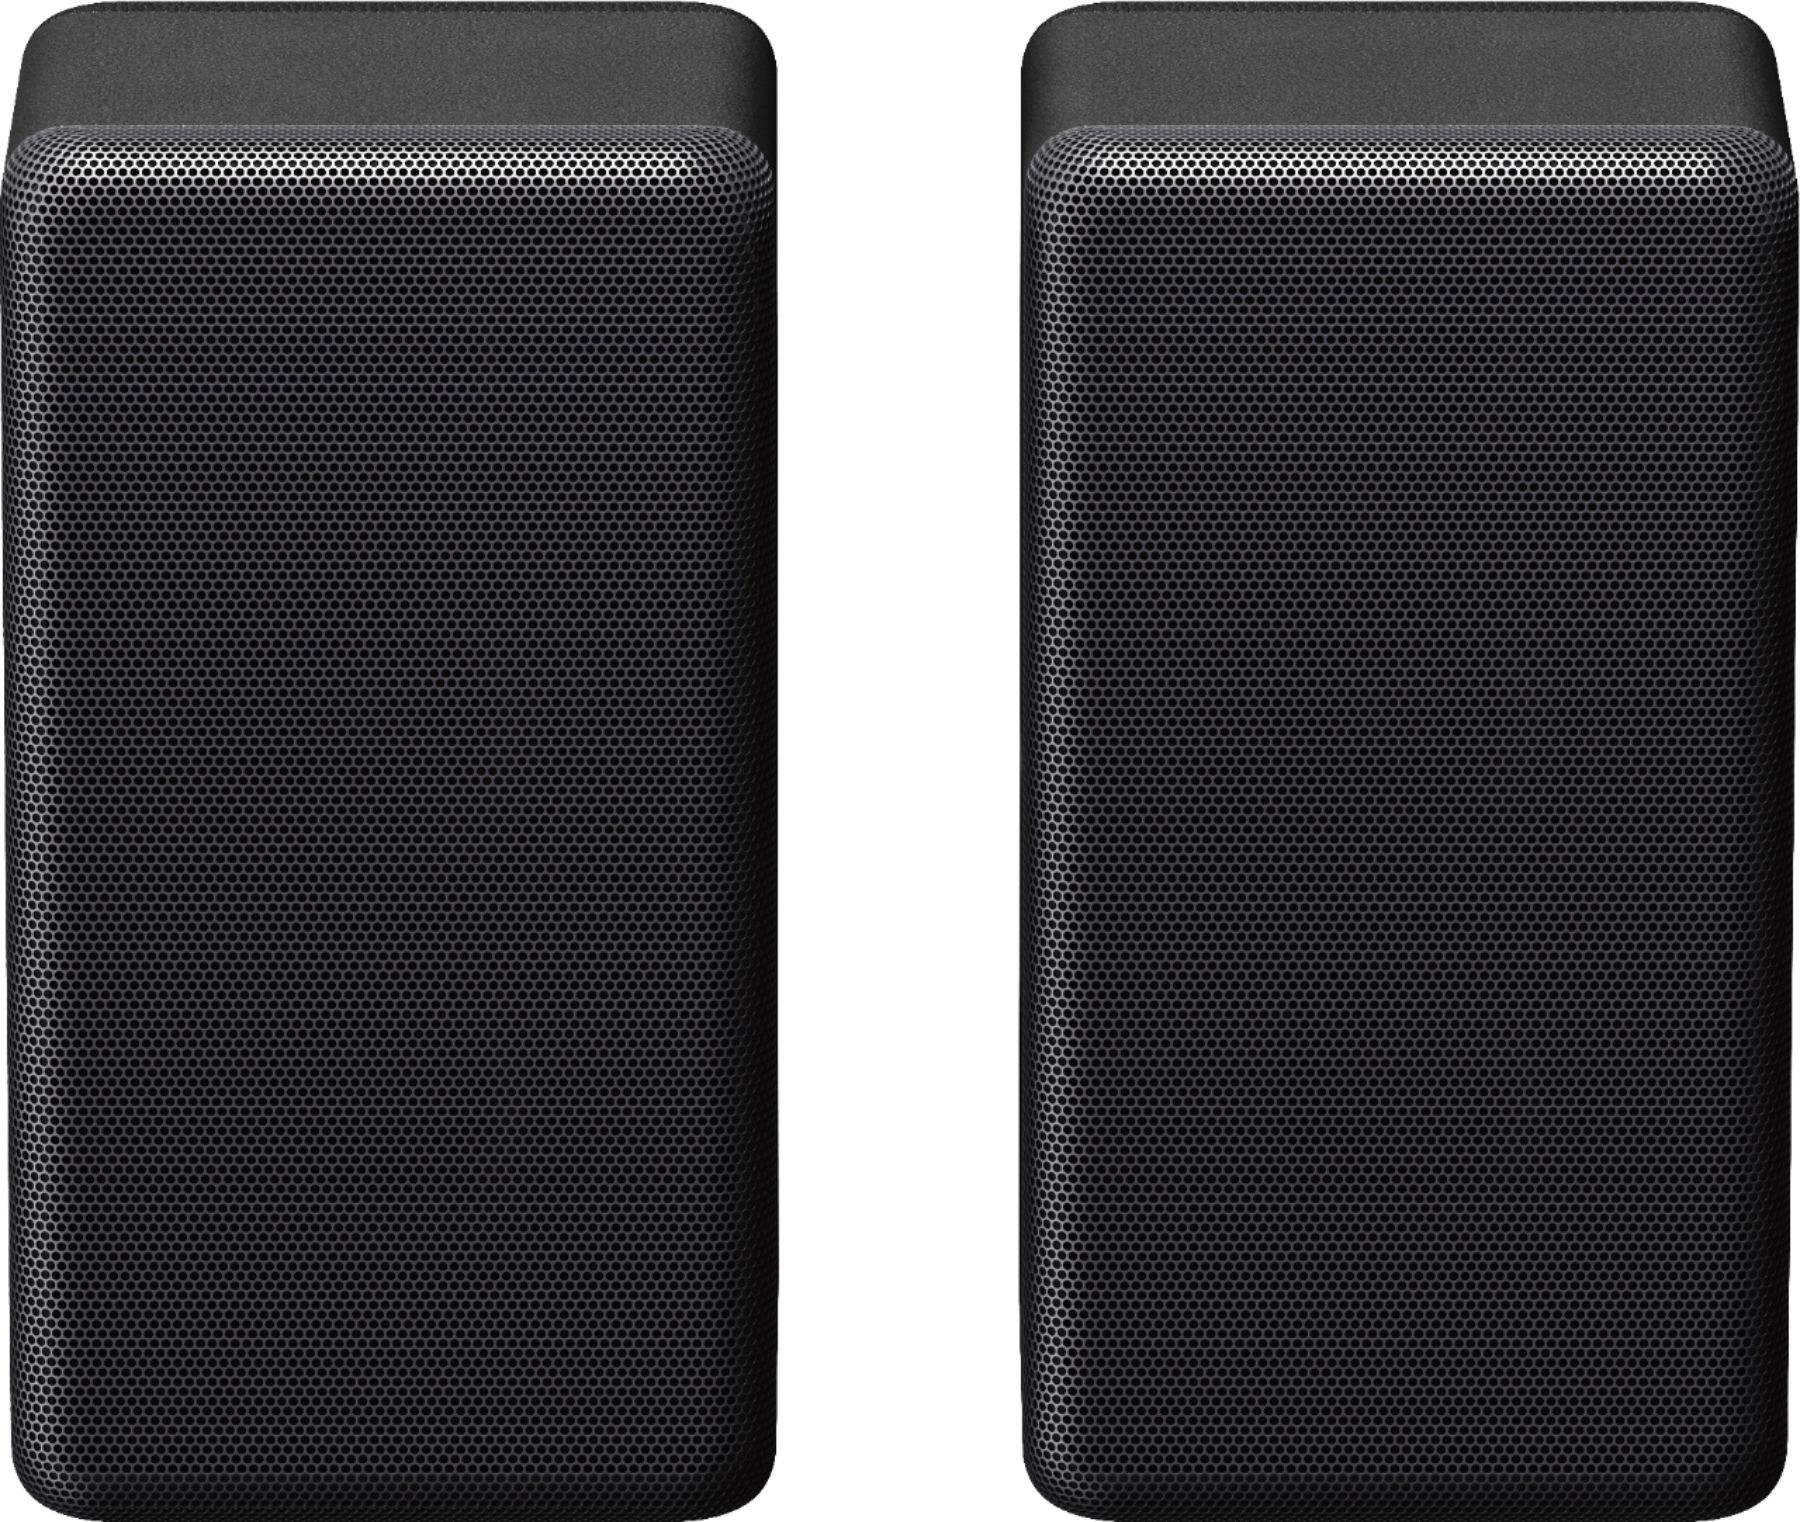 Best Black Sony Rear Buy Speaker - SARS3S SA-RS3S Wireless